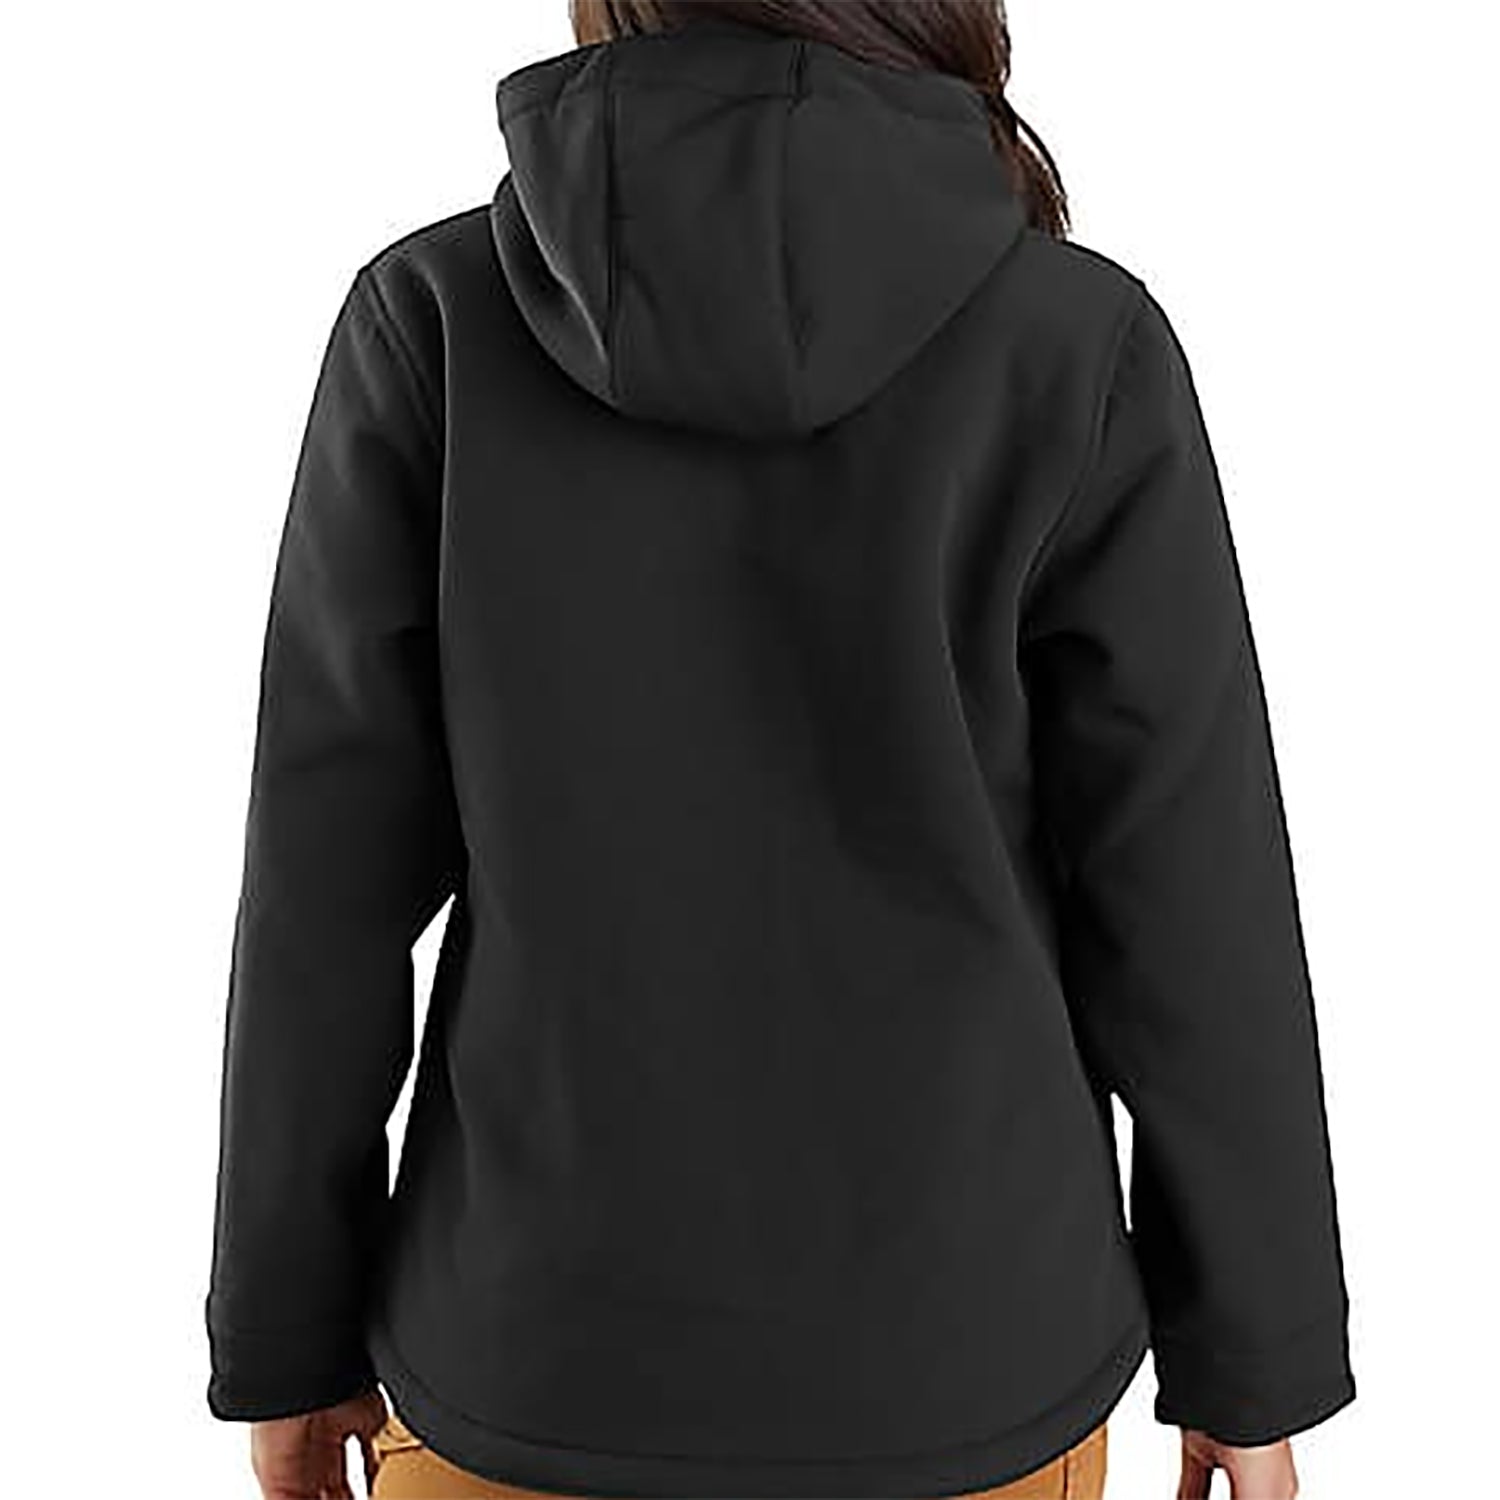 Hot Leathers® 1494 - Women's Hooded Sweatshirt (2X-Large, Black